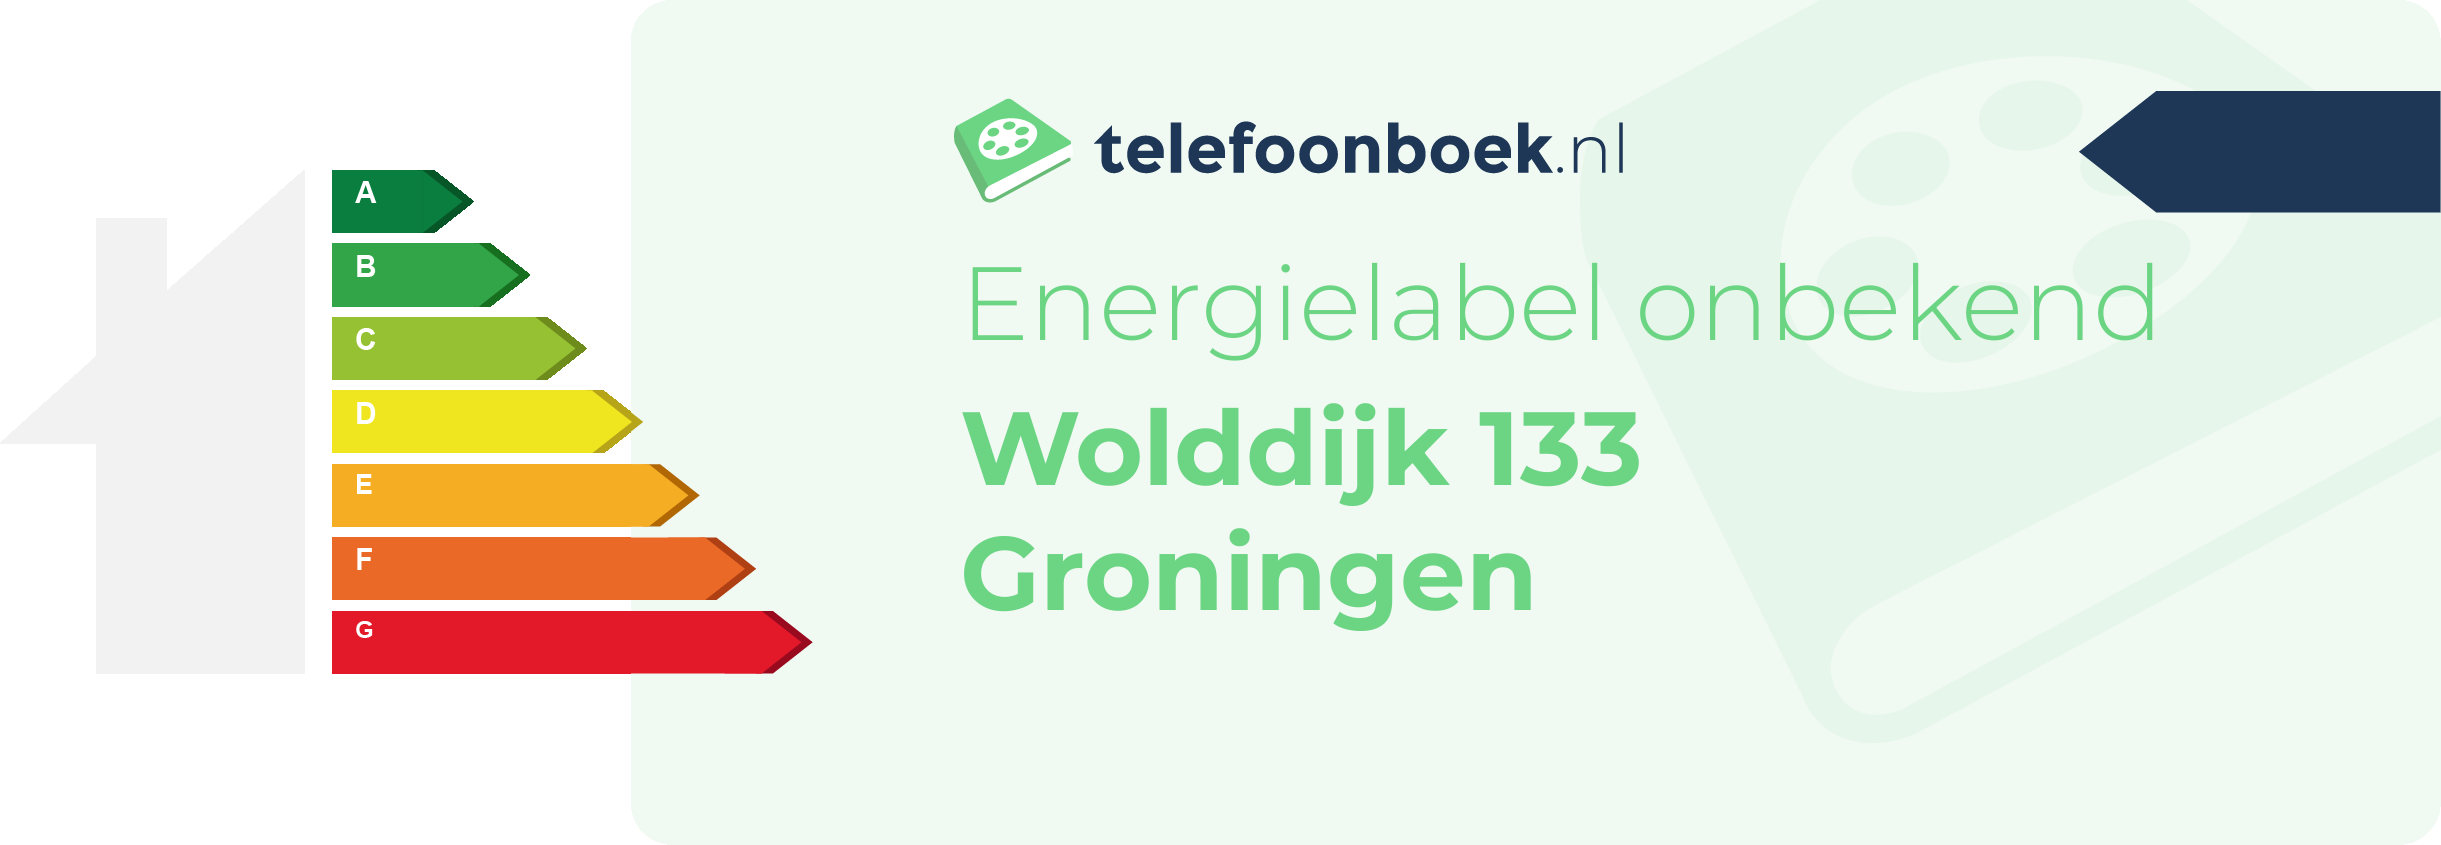 Energielabel Wolddijk 133 Groningen